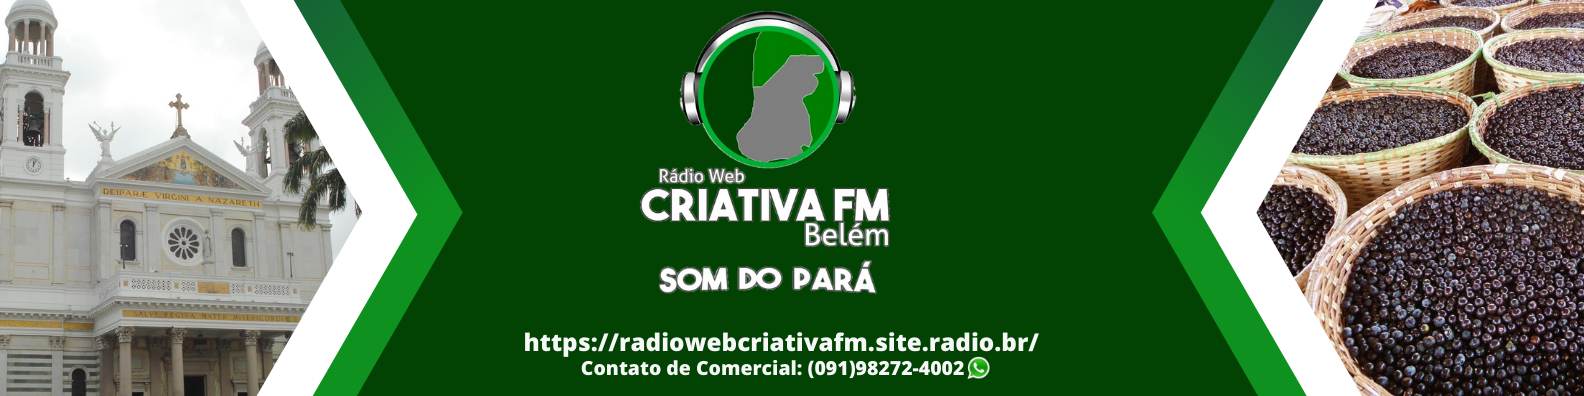 RÁDIO WEB CRIATIVA FM BELÉM